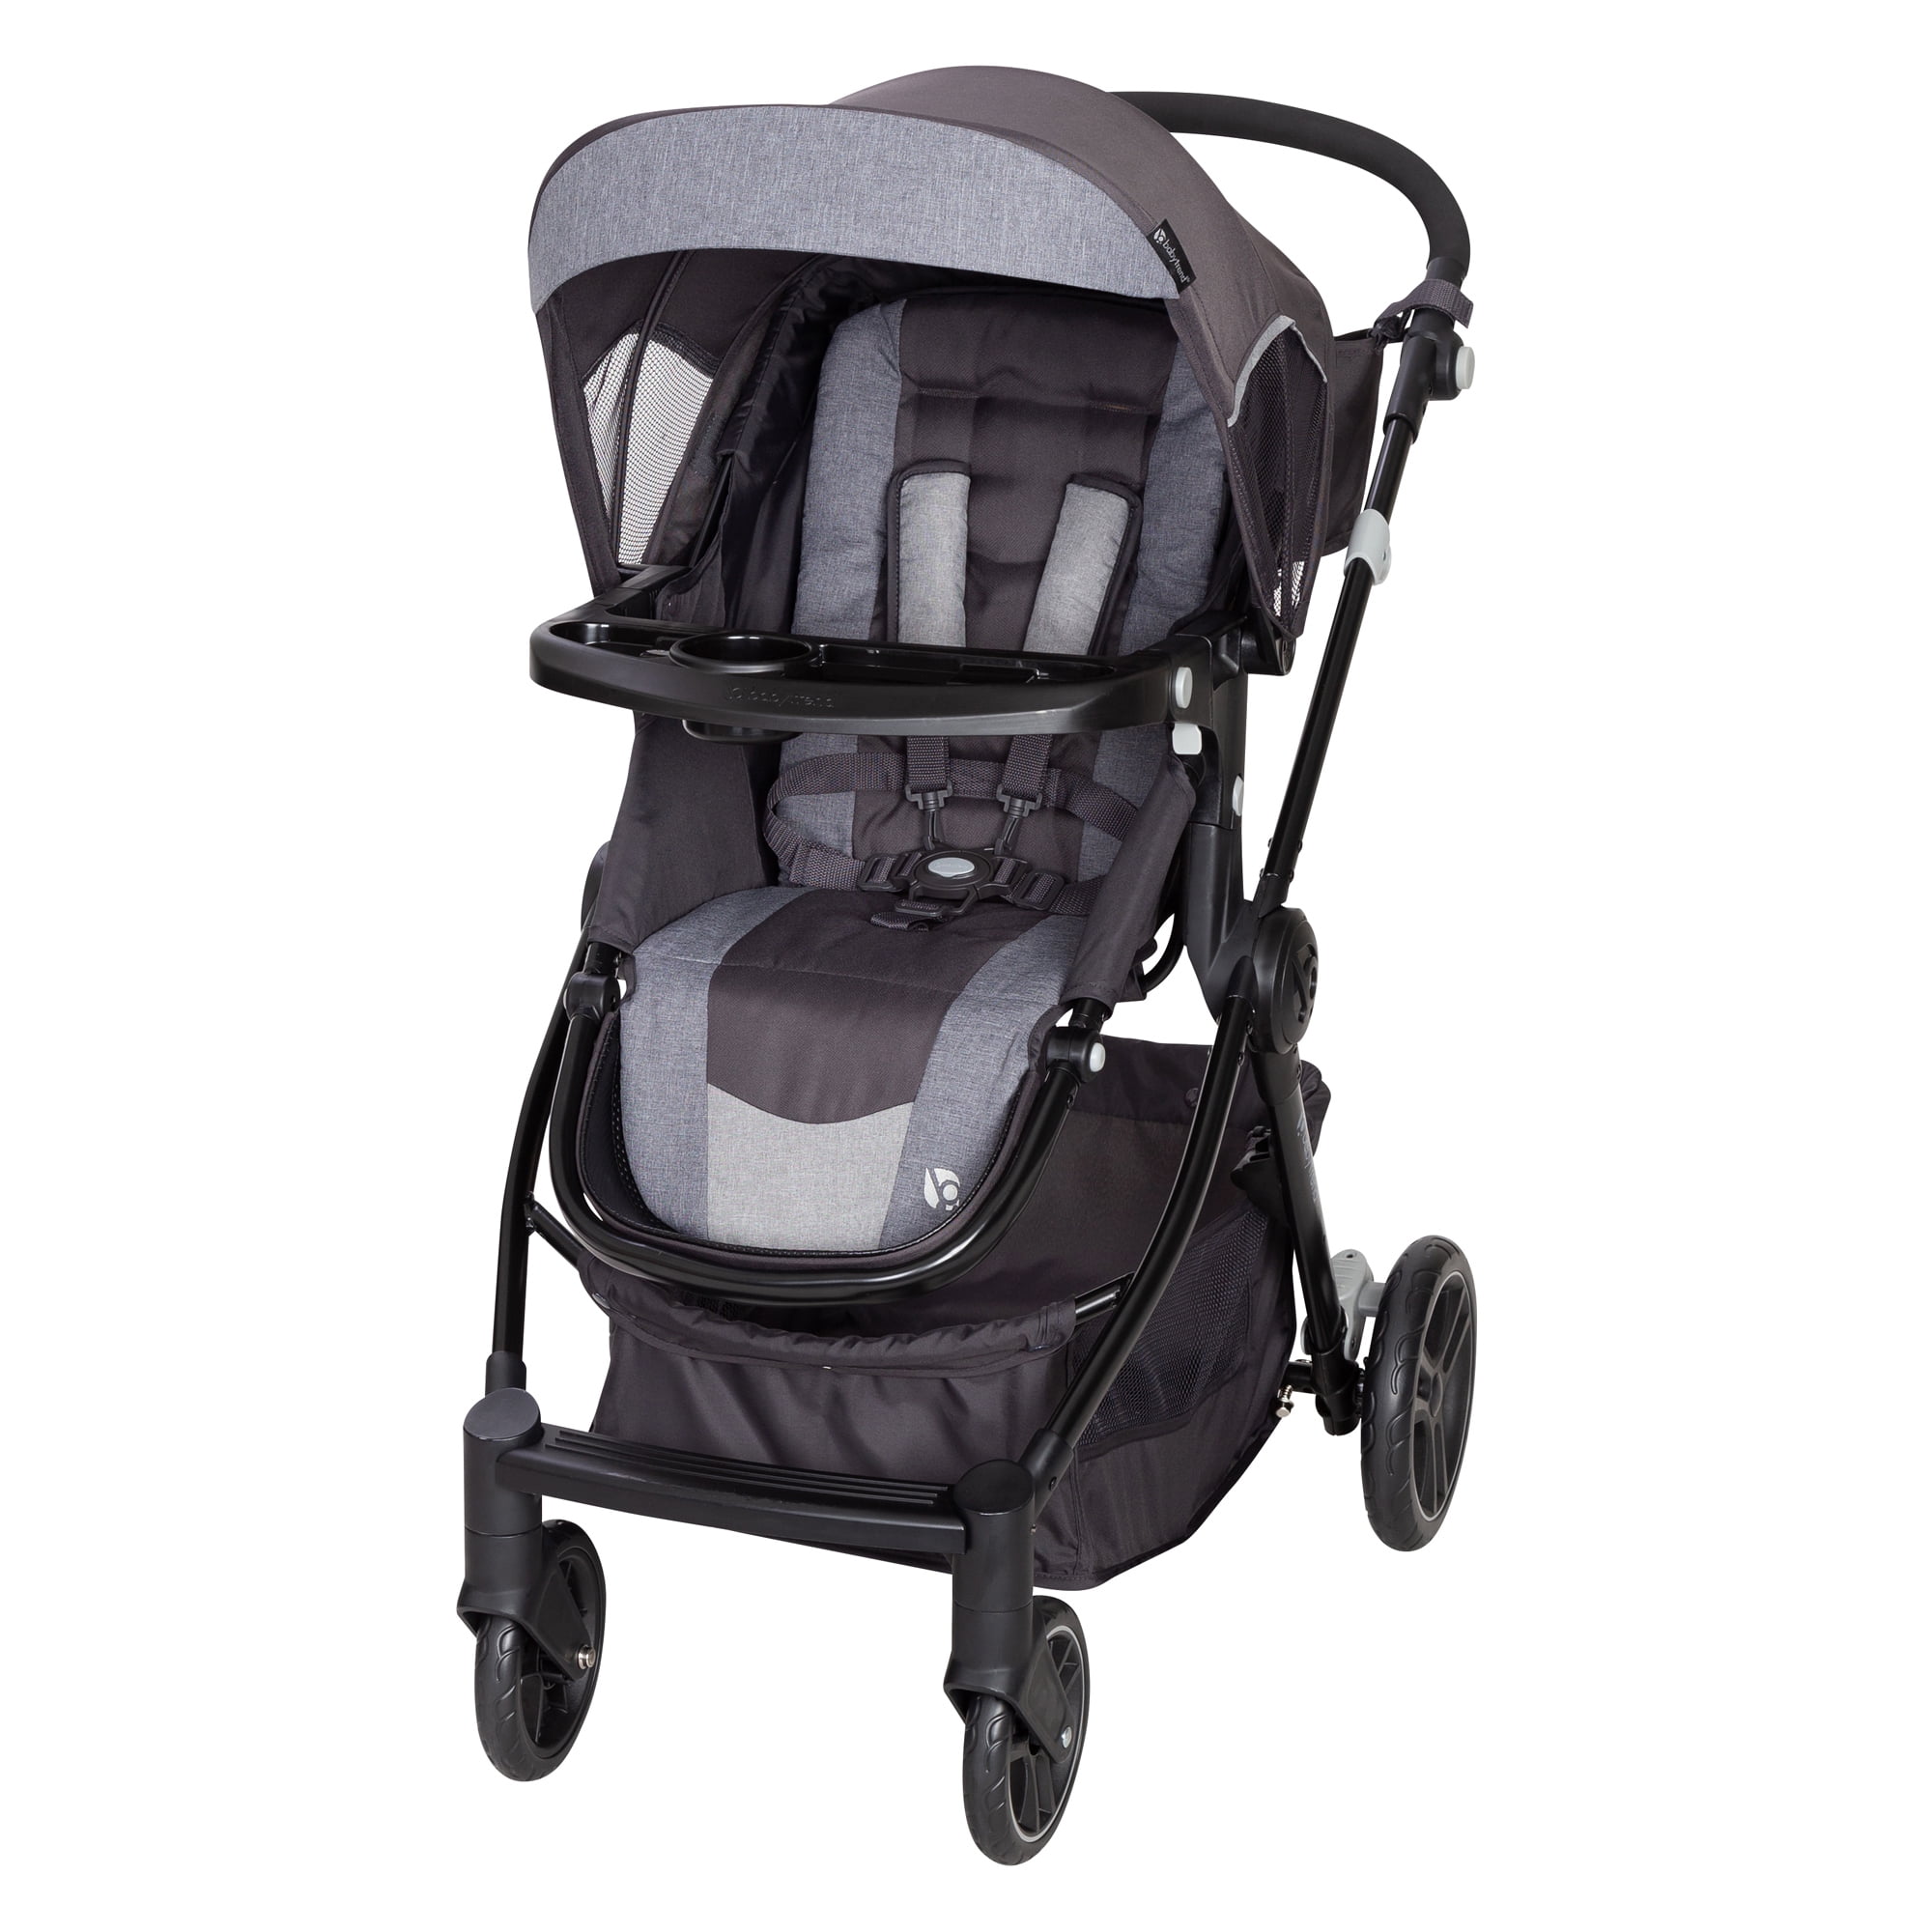 baby trend lightweight double stroller